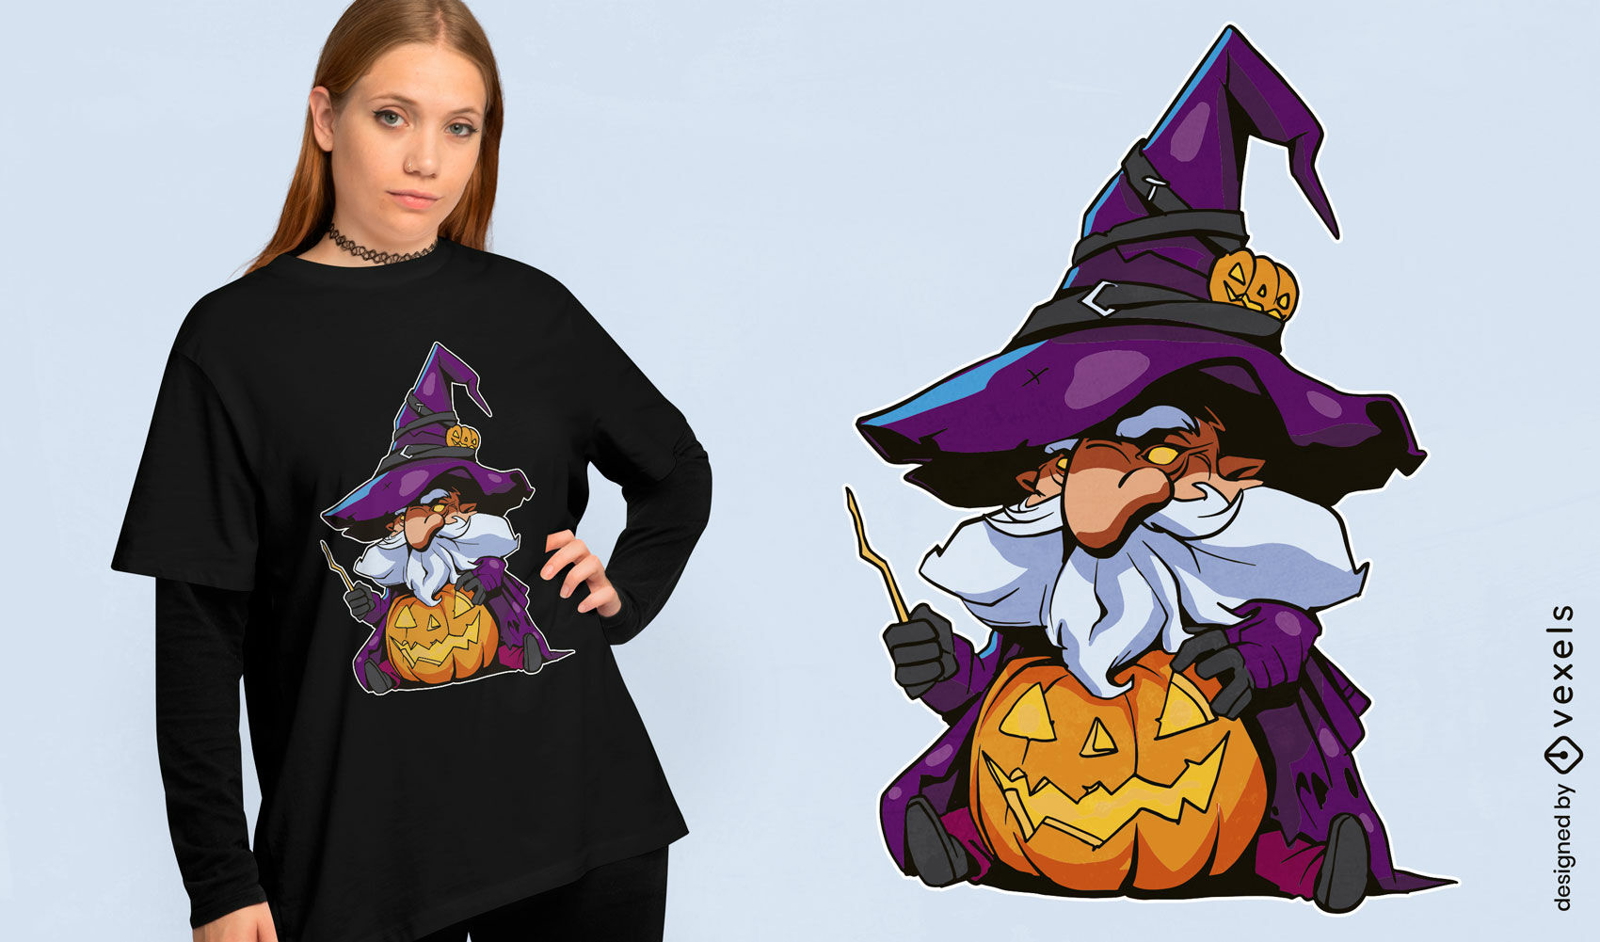 Wizard gnome t-shirt design